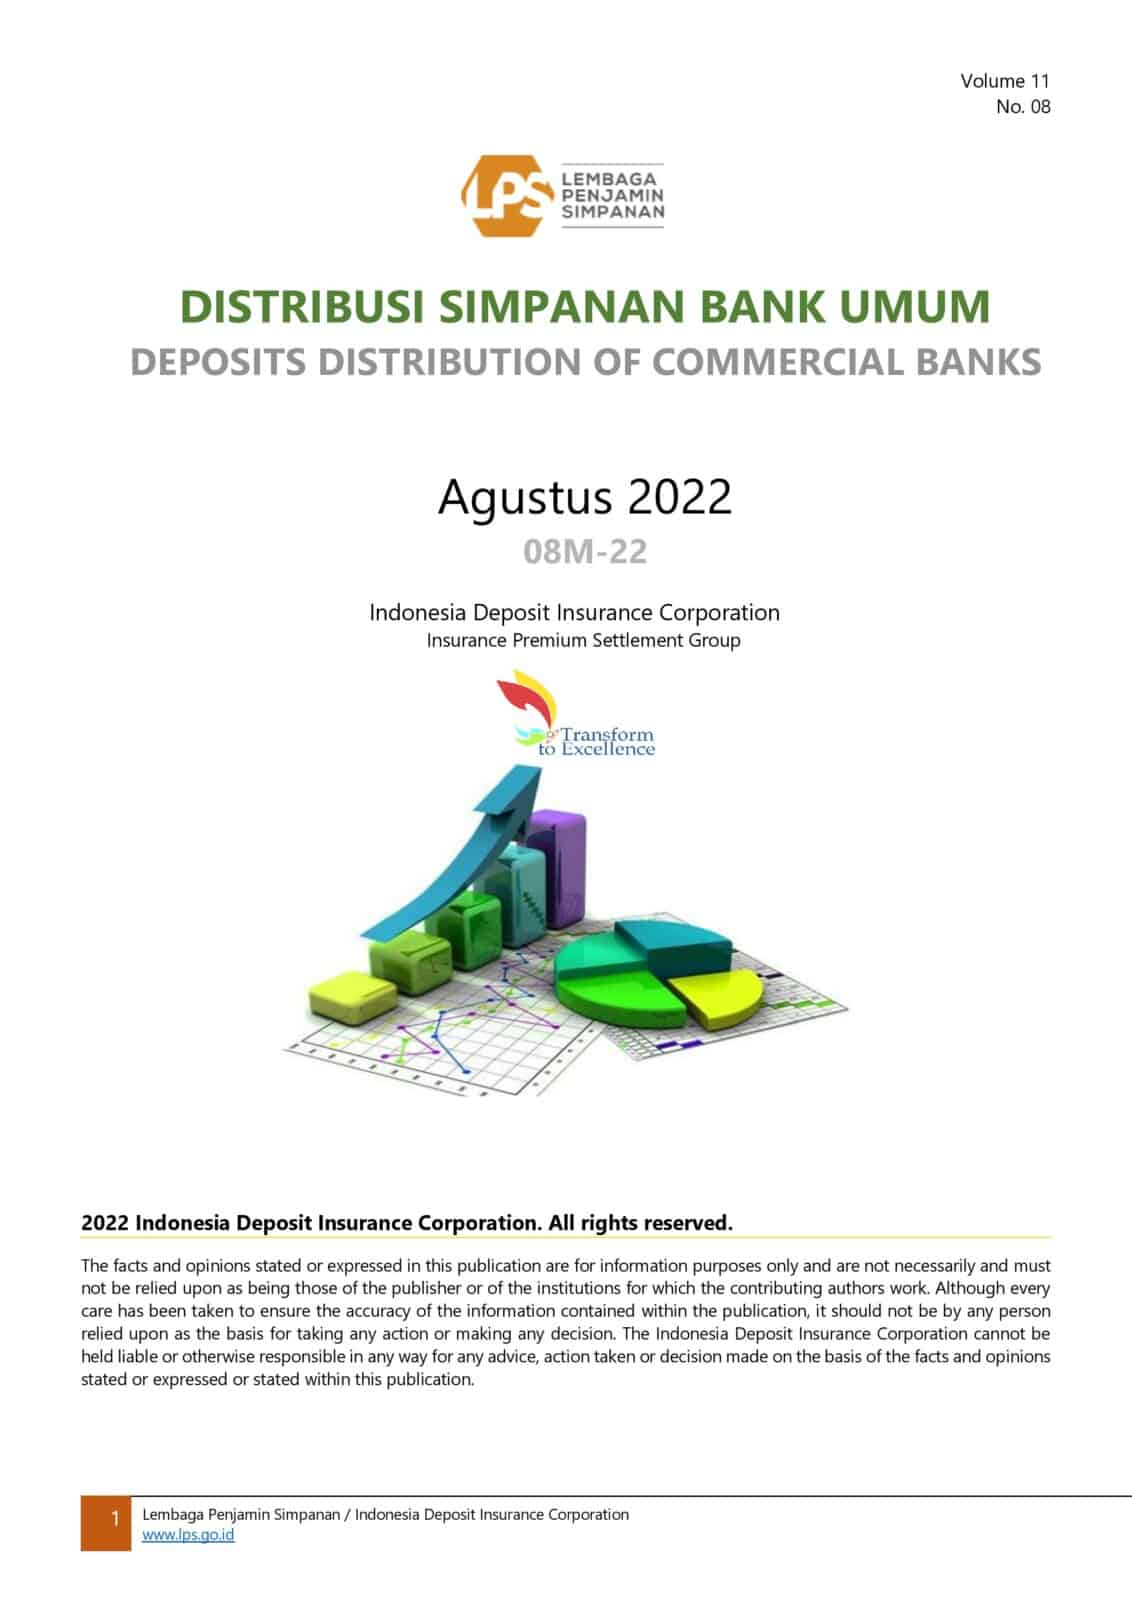 Data Distribusi Simpanan Periode Agustus 2022